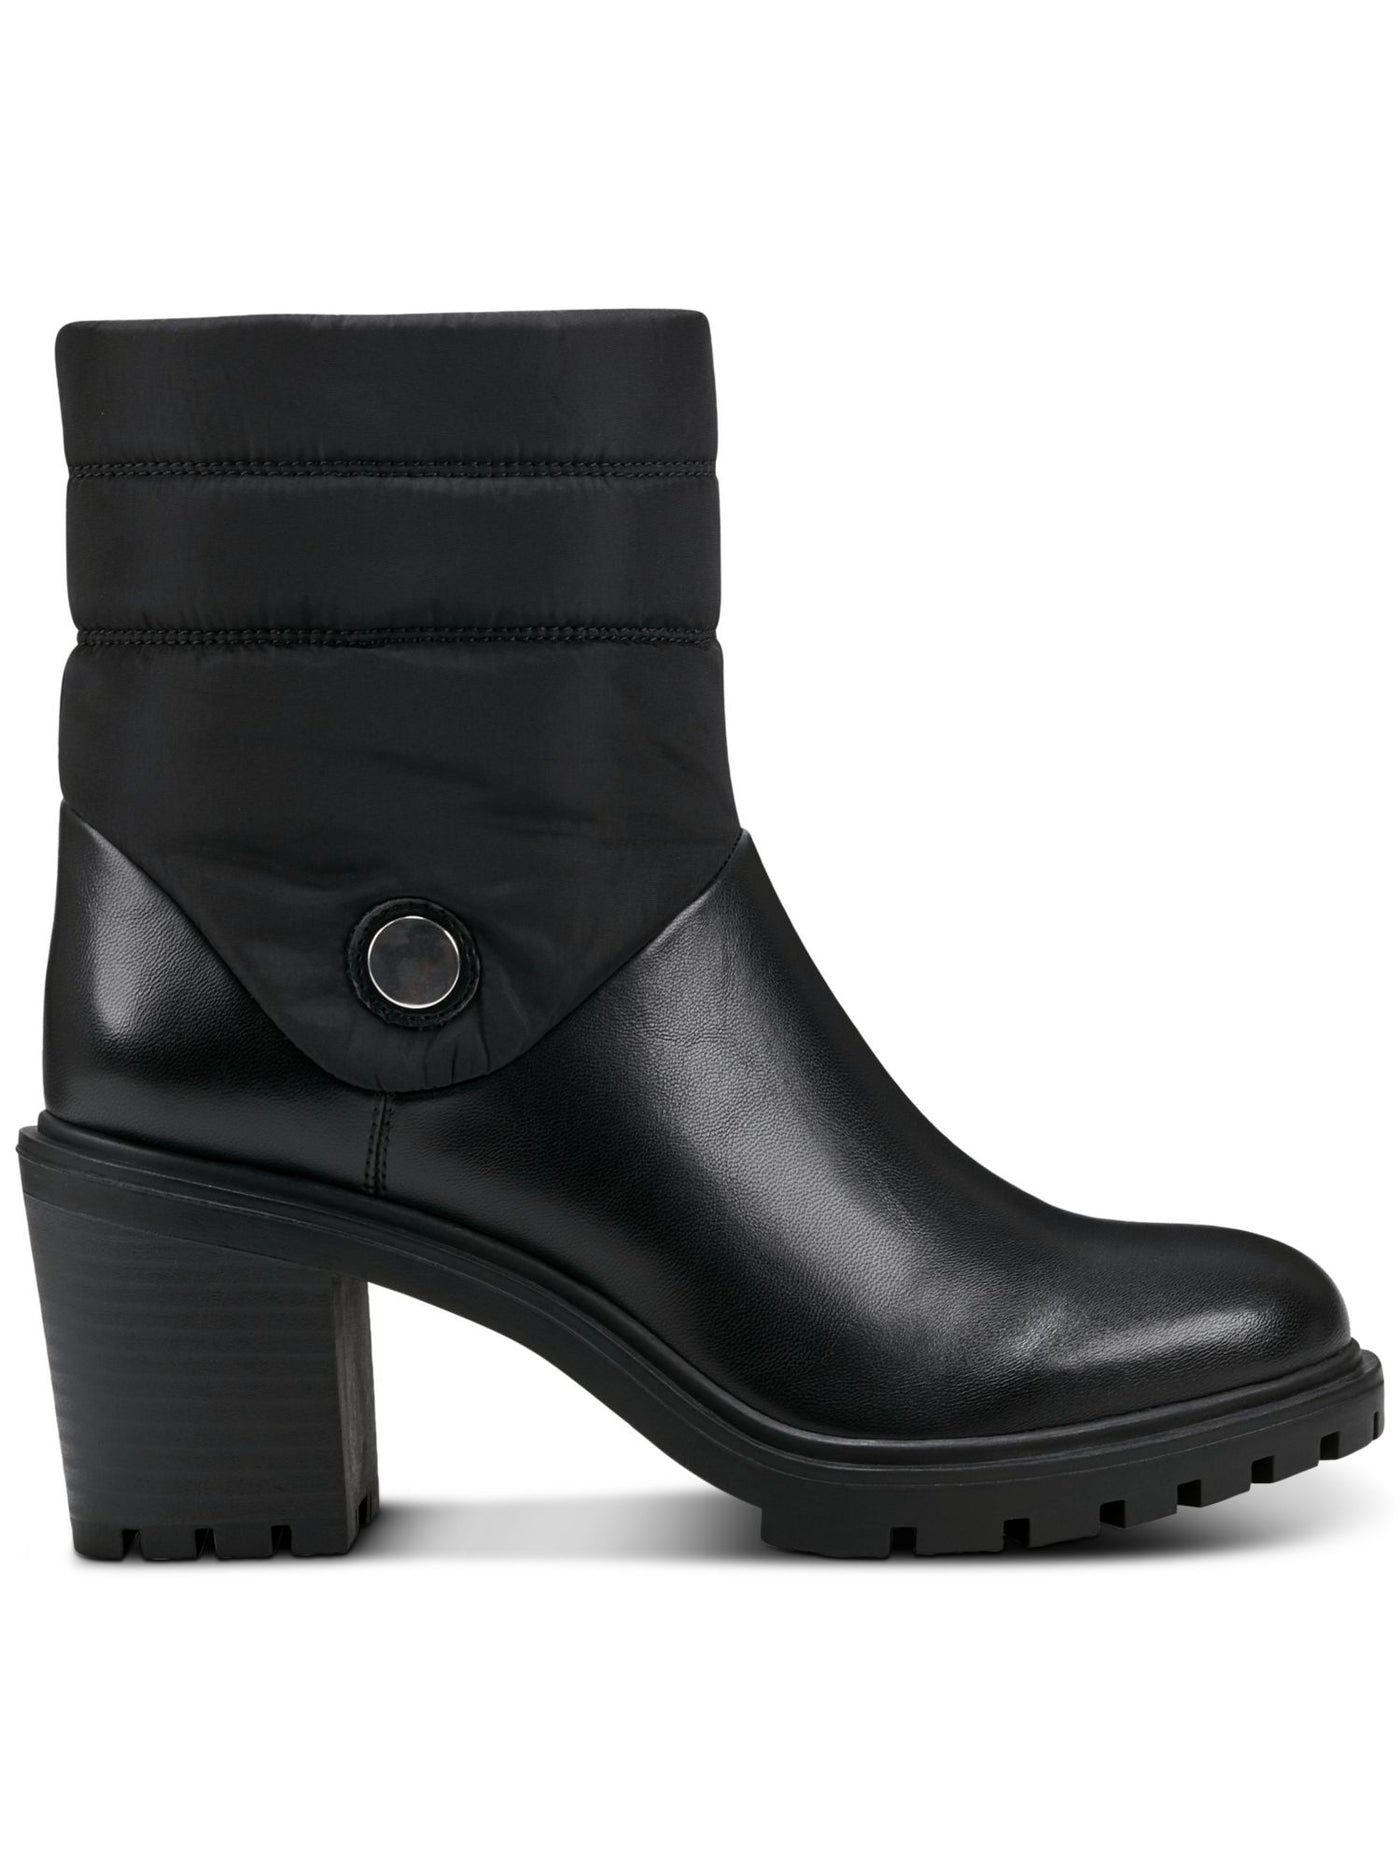 ALFANI Womens Black Puffer Lug Sole Padded Belcalise Almond Toe Block Heel Zip-Up Boots Shoes 8.5 M